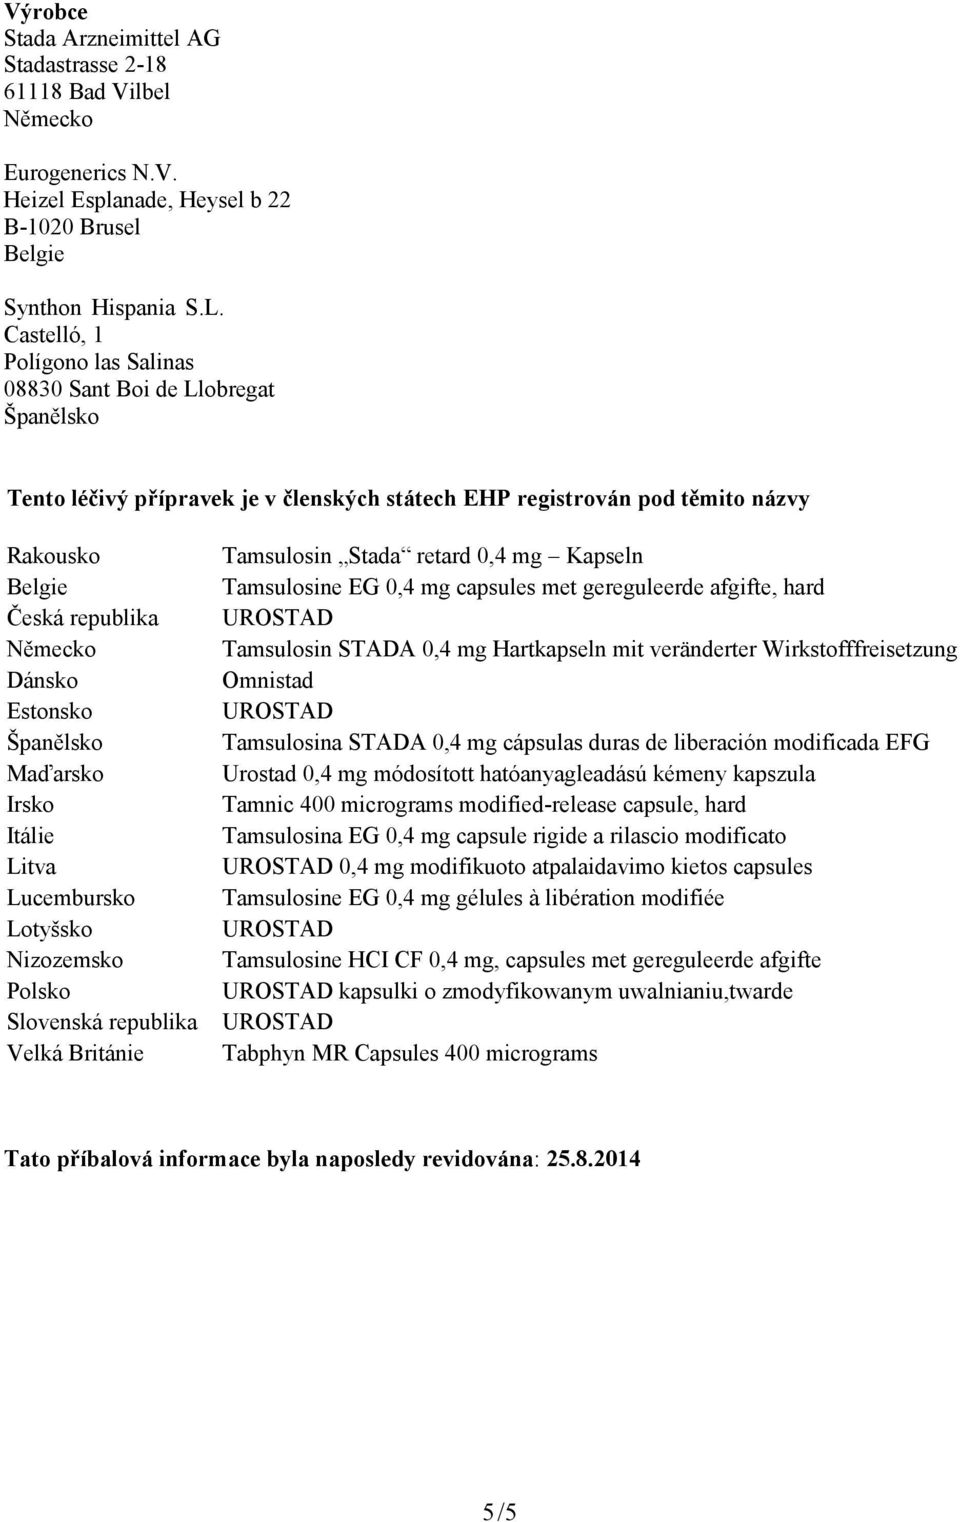 Španělsko Maďarsko Irsko Itálie Litva Lucembursko Lotyšsko Nizozemsko Polsko Slovenská republika Velká Británie Tamsulosin Stada retard 0,4 mg Kapseln Tamsulosine EG 0,4 mg capsules met gereguleerde